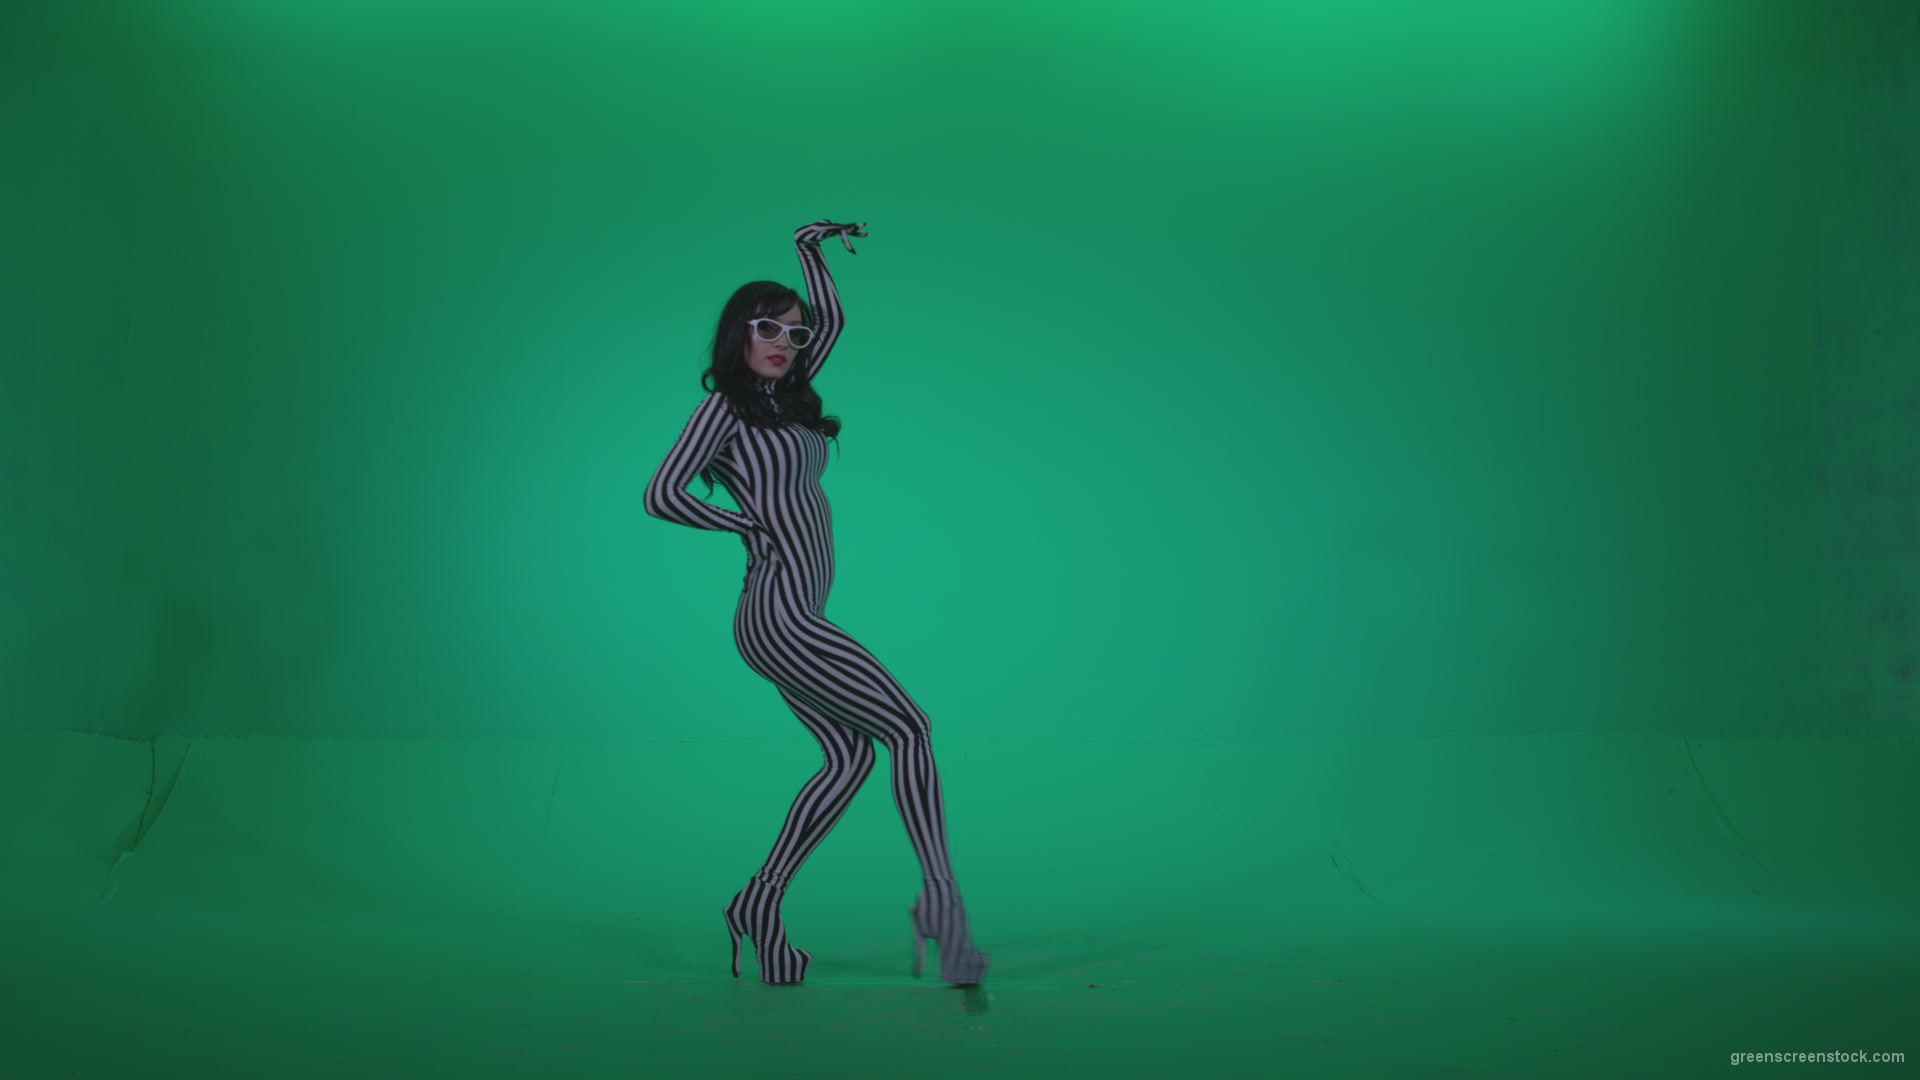 Go-go-Dancer-White-Stripes-s11-Green-Screen-Video-Footage_009 Green Screen Stock